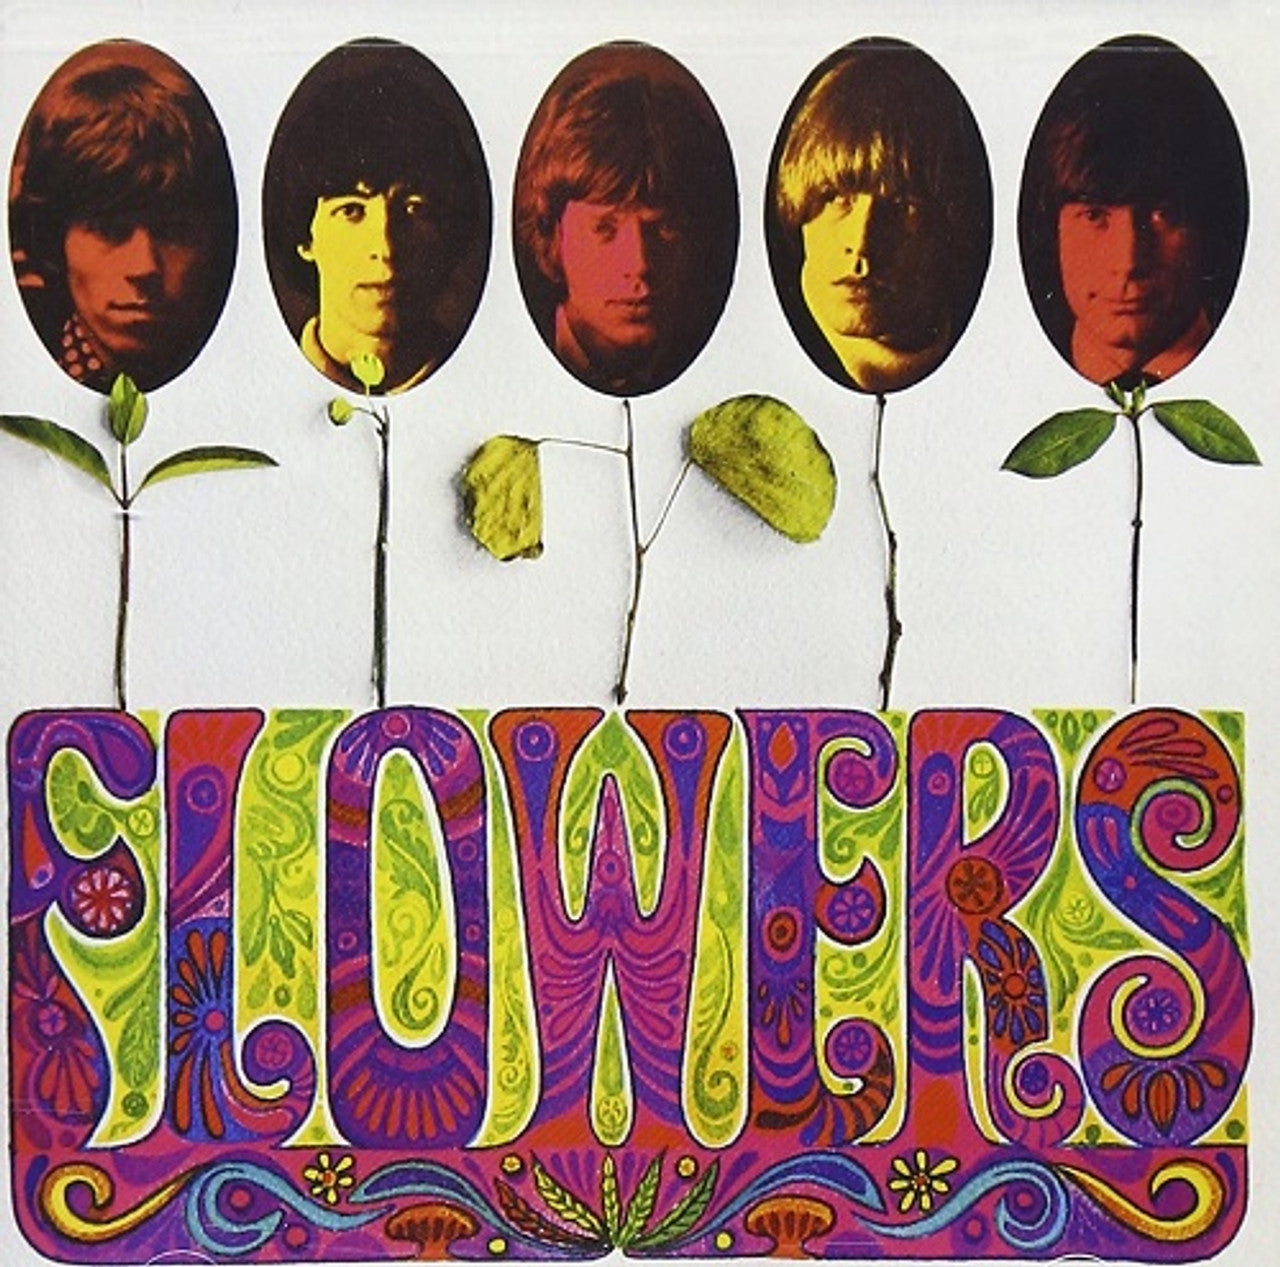 THE ROLLING STONES - FLOWERS - VINYL LP